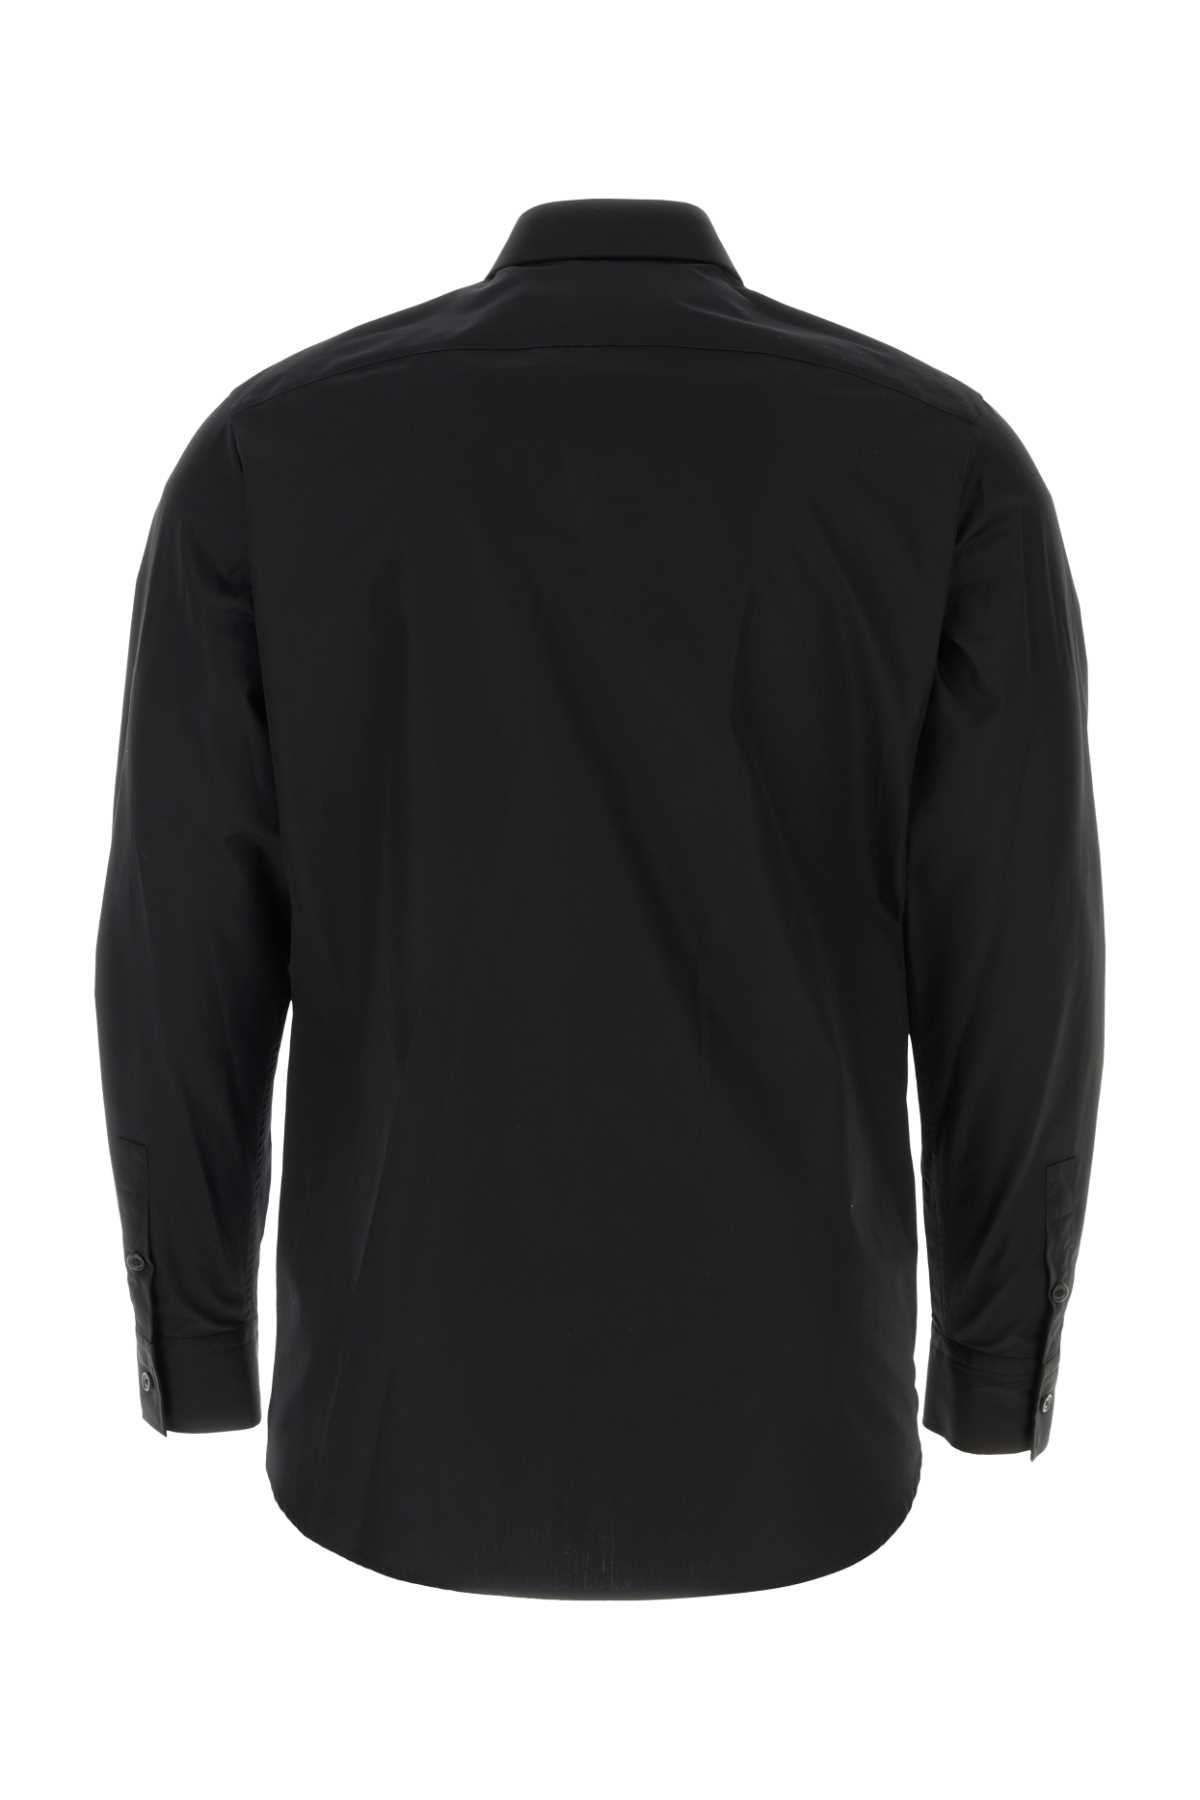 Balmain Black Poplin Shirt In 0panoir